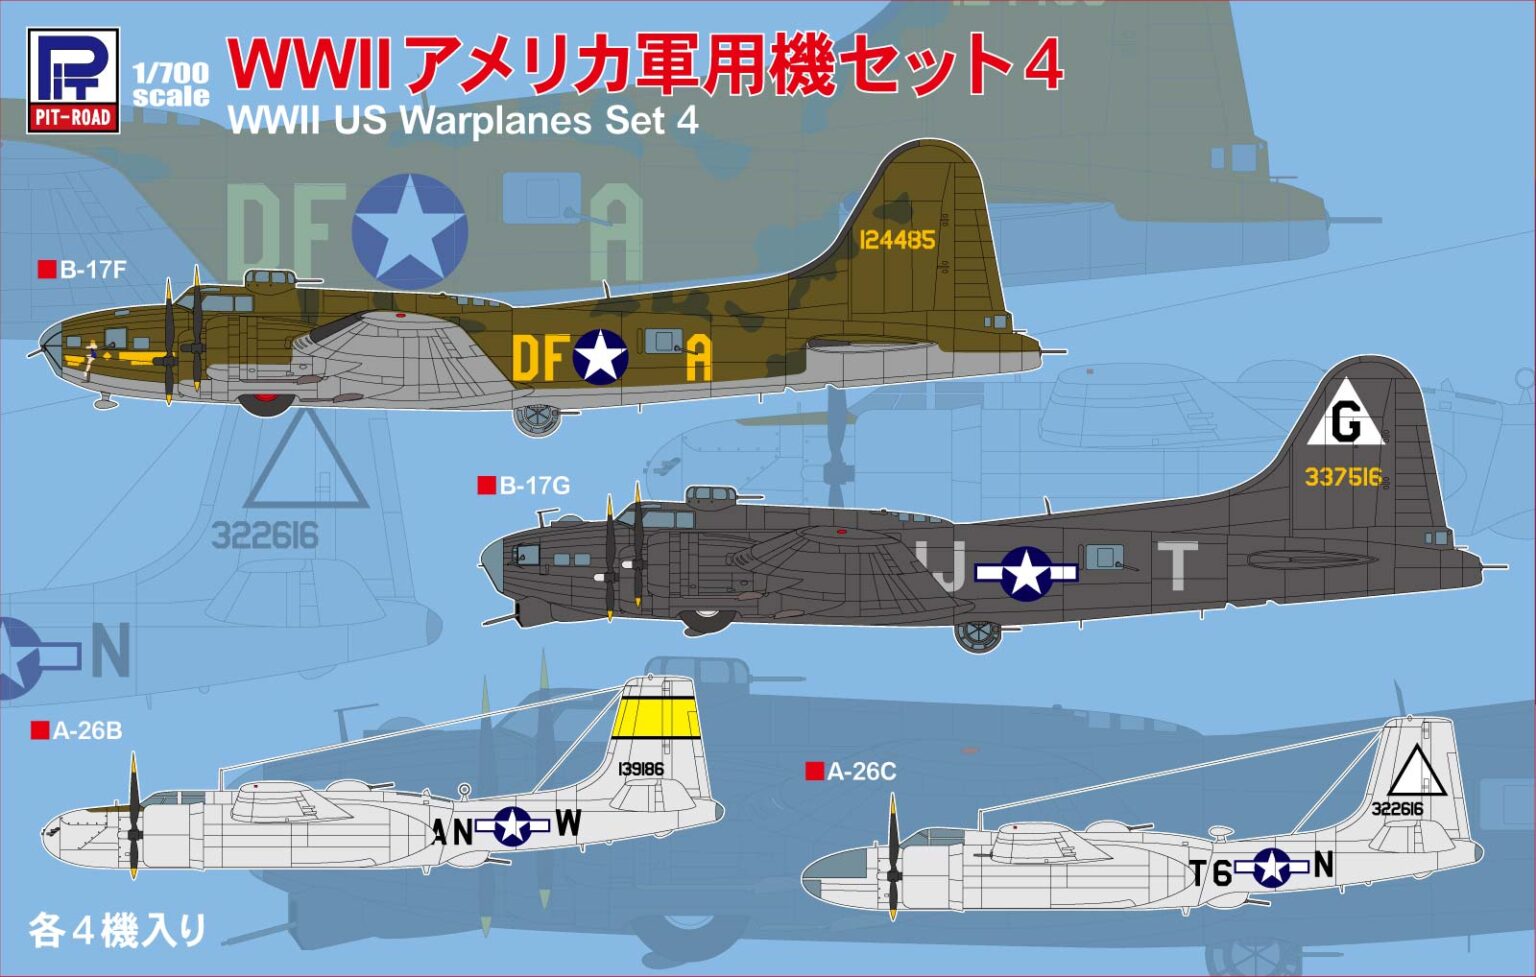 1/700 WWIIアメリカ軍用機セット4